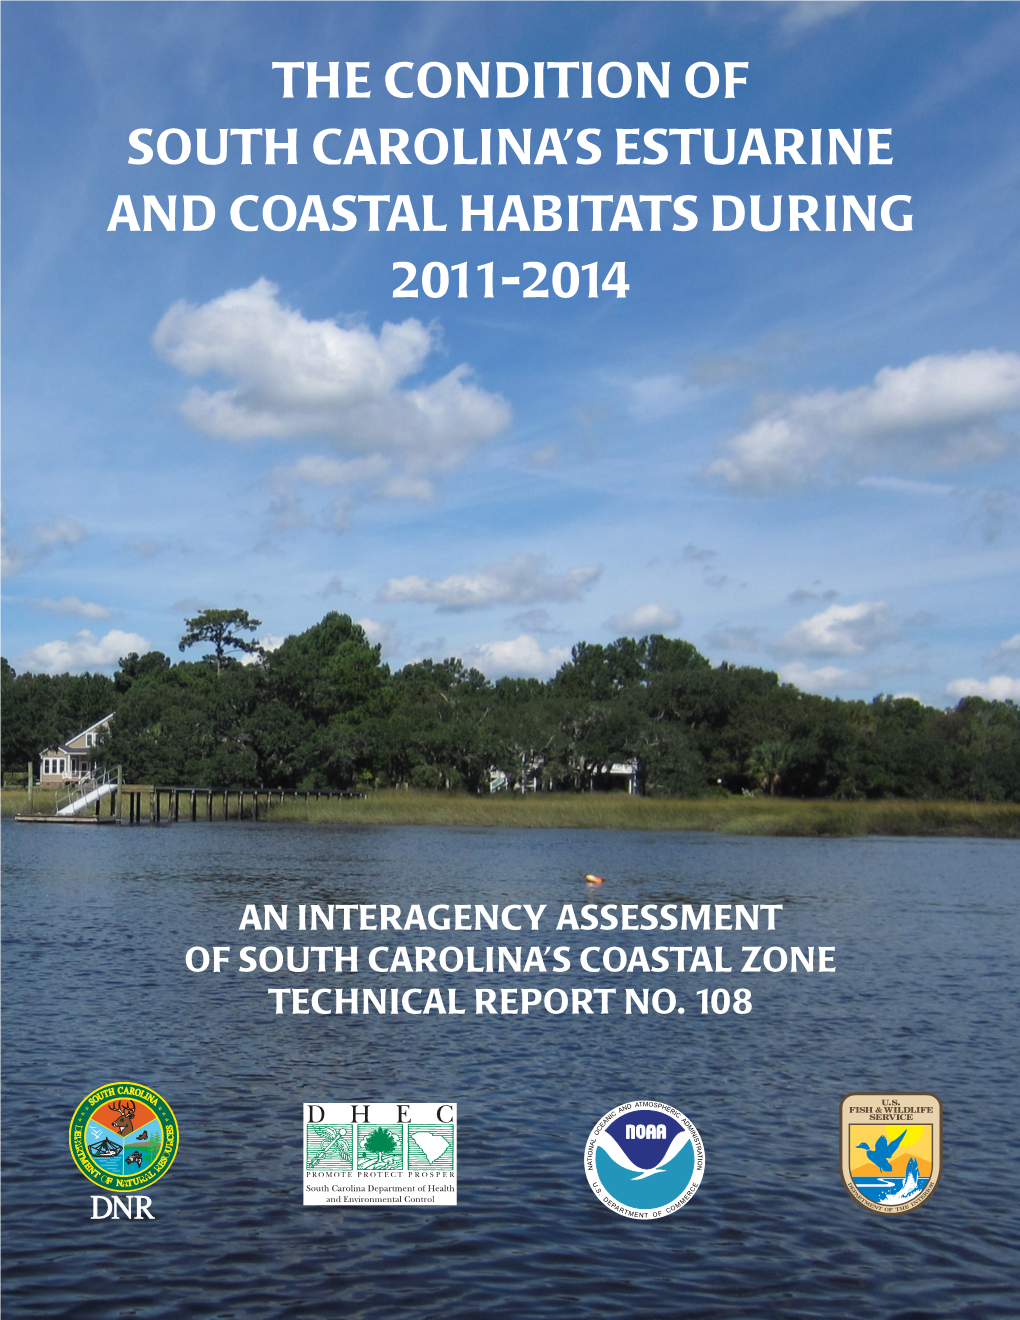 SC Estuarine and Coastal Assessment Program, 2011-2014 Technical Report